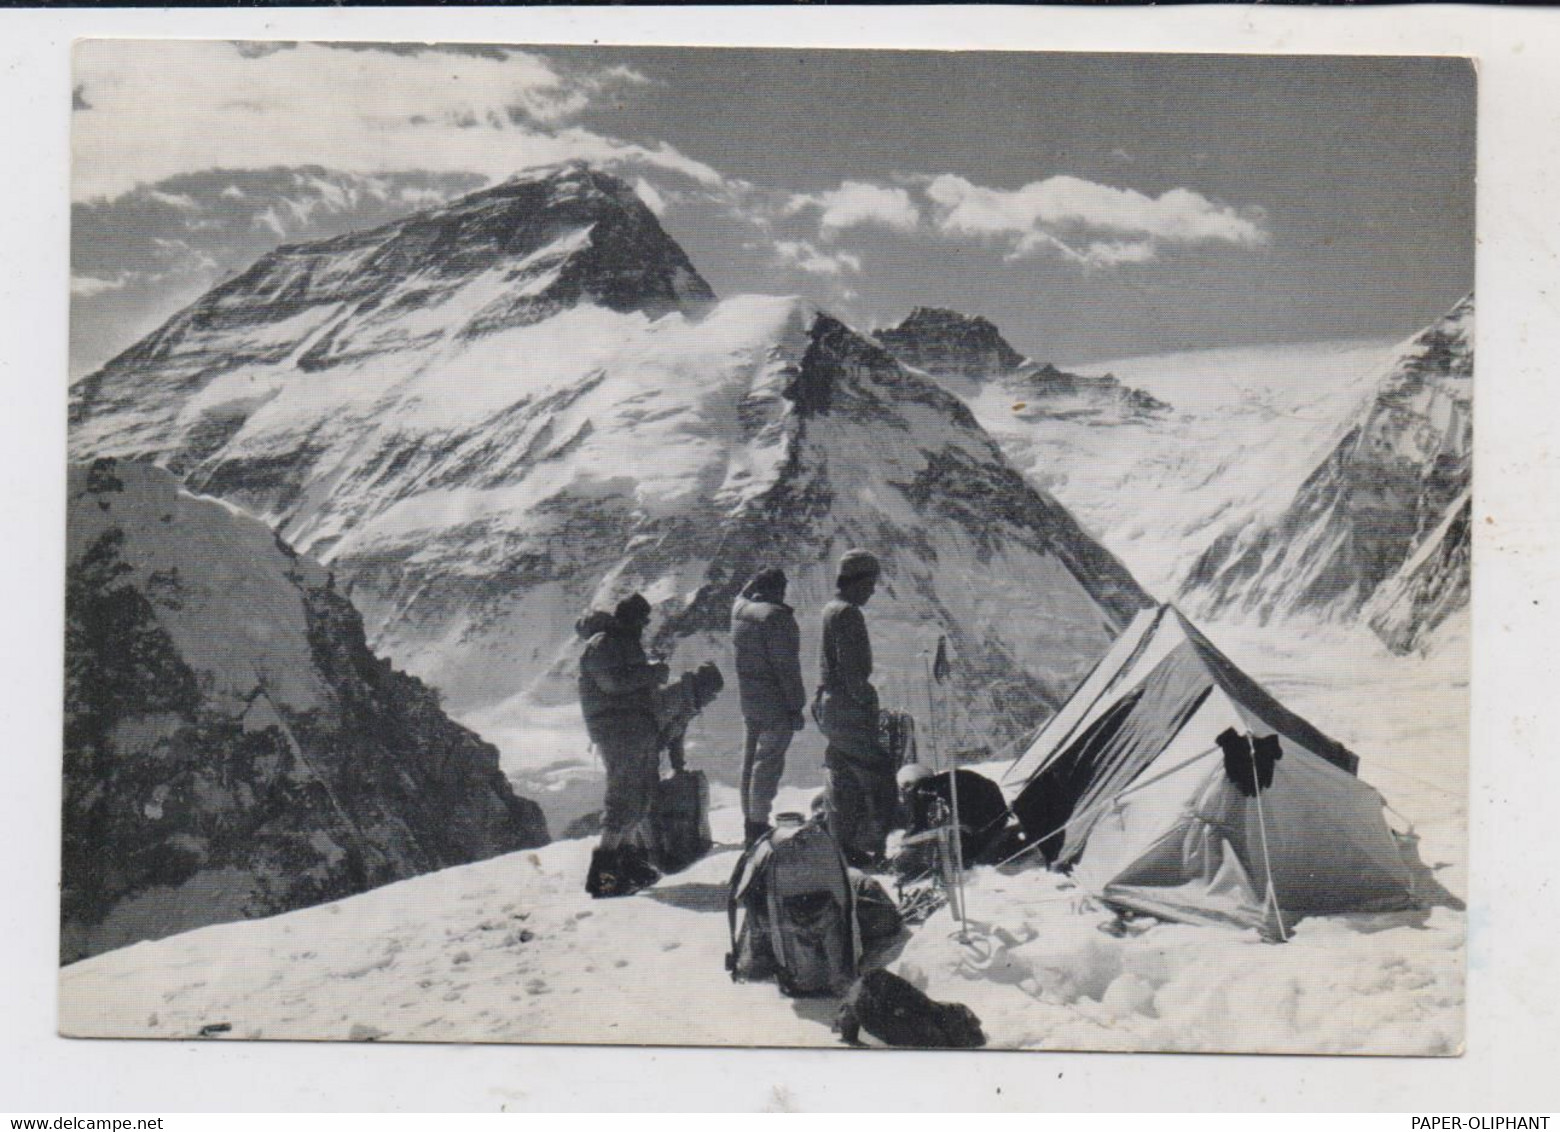 BERSTEIGEN / Climbing, Deutsche Nepal Expedition 1965 - Alpinisme